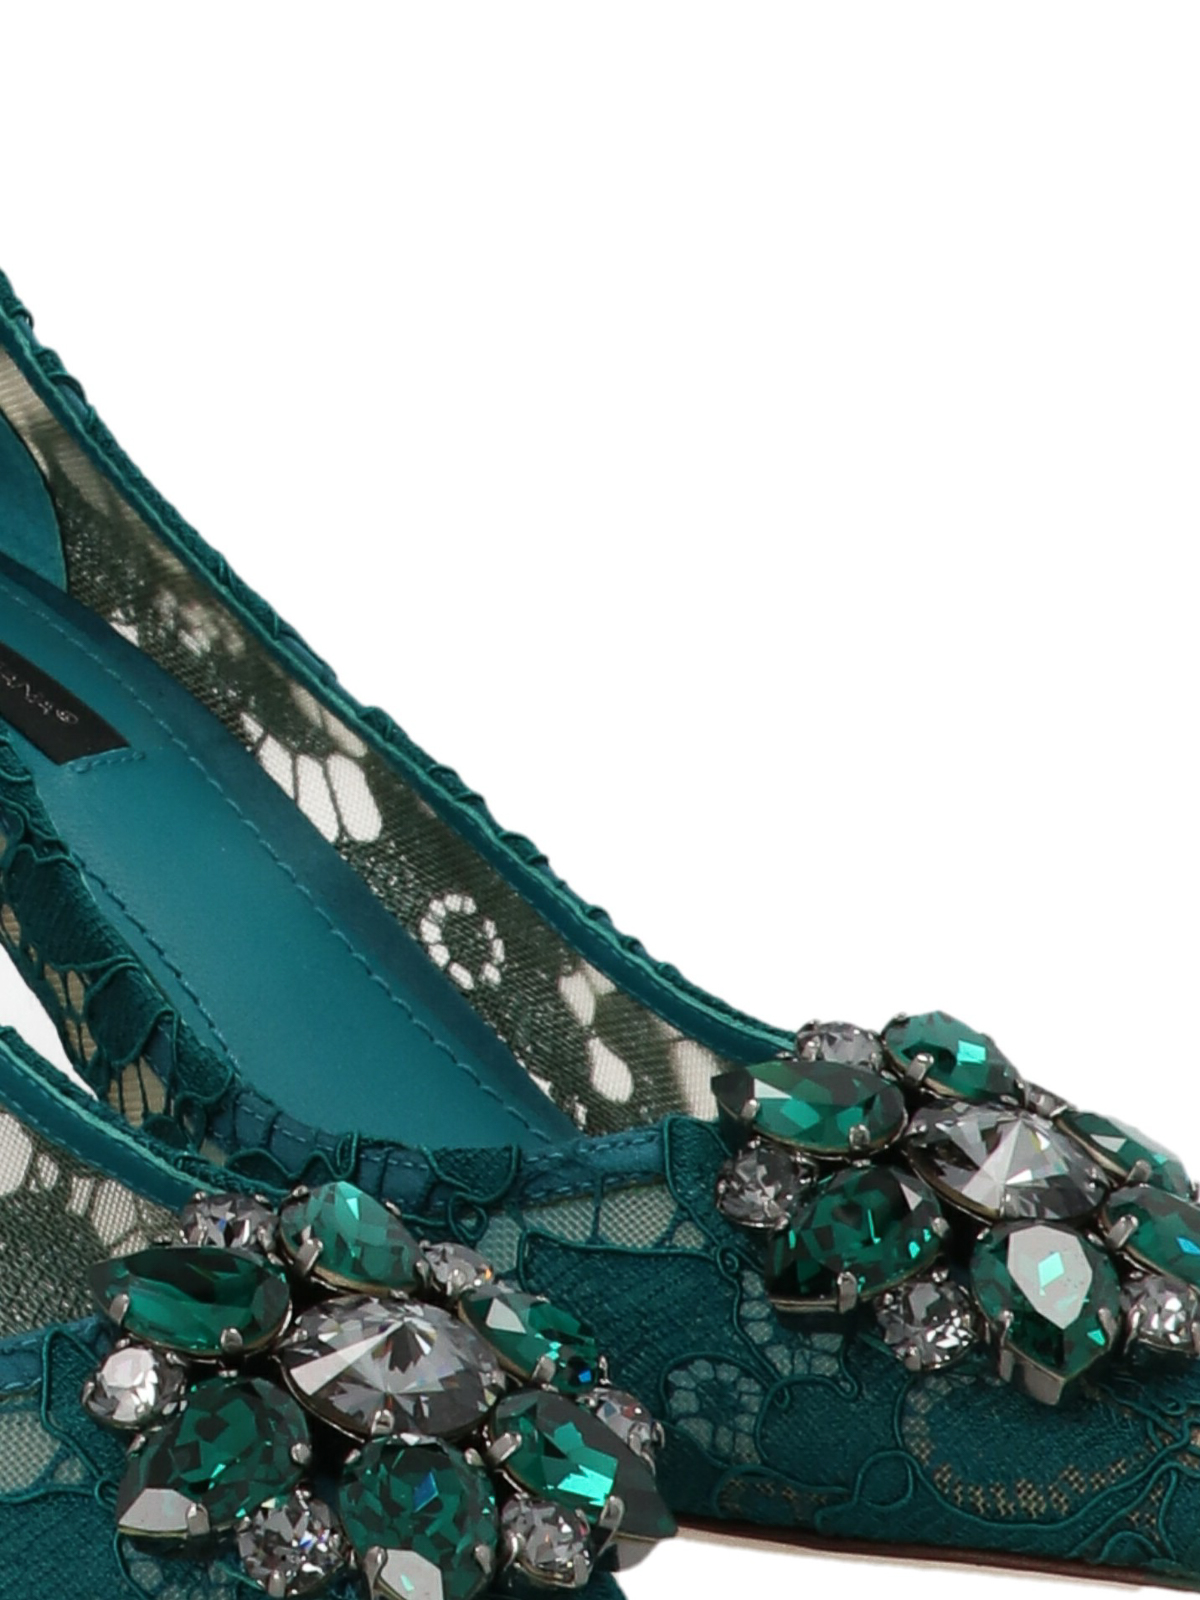 Shop Dolce & Gabbana Zapatos De Salón - Bellucci In Verde